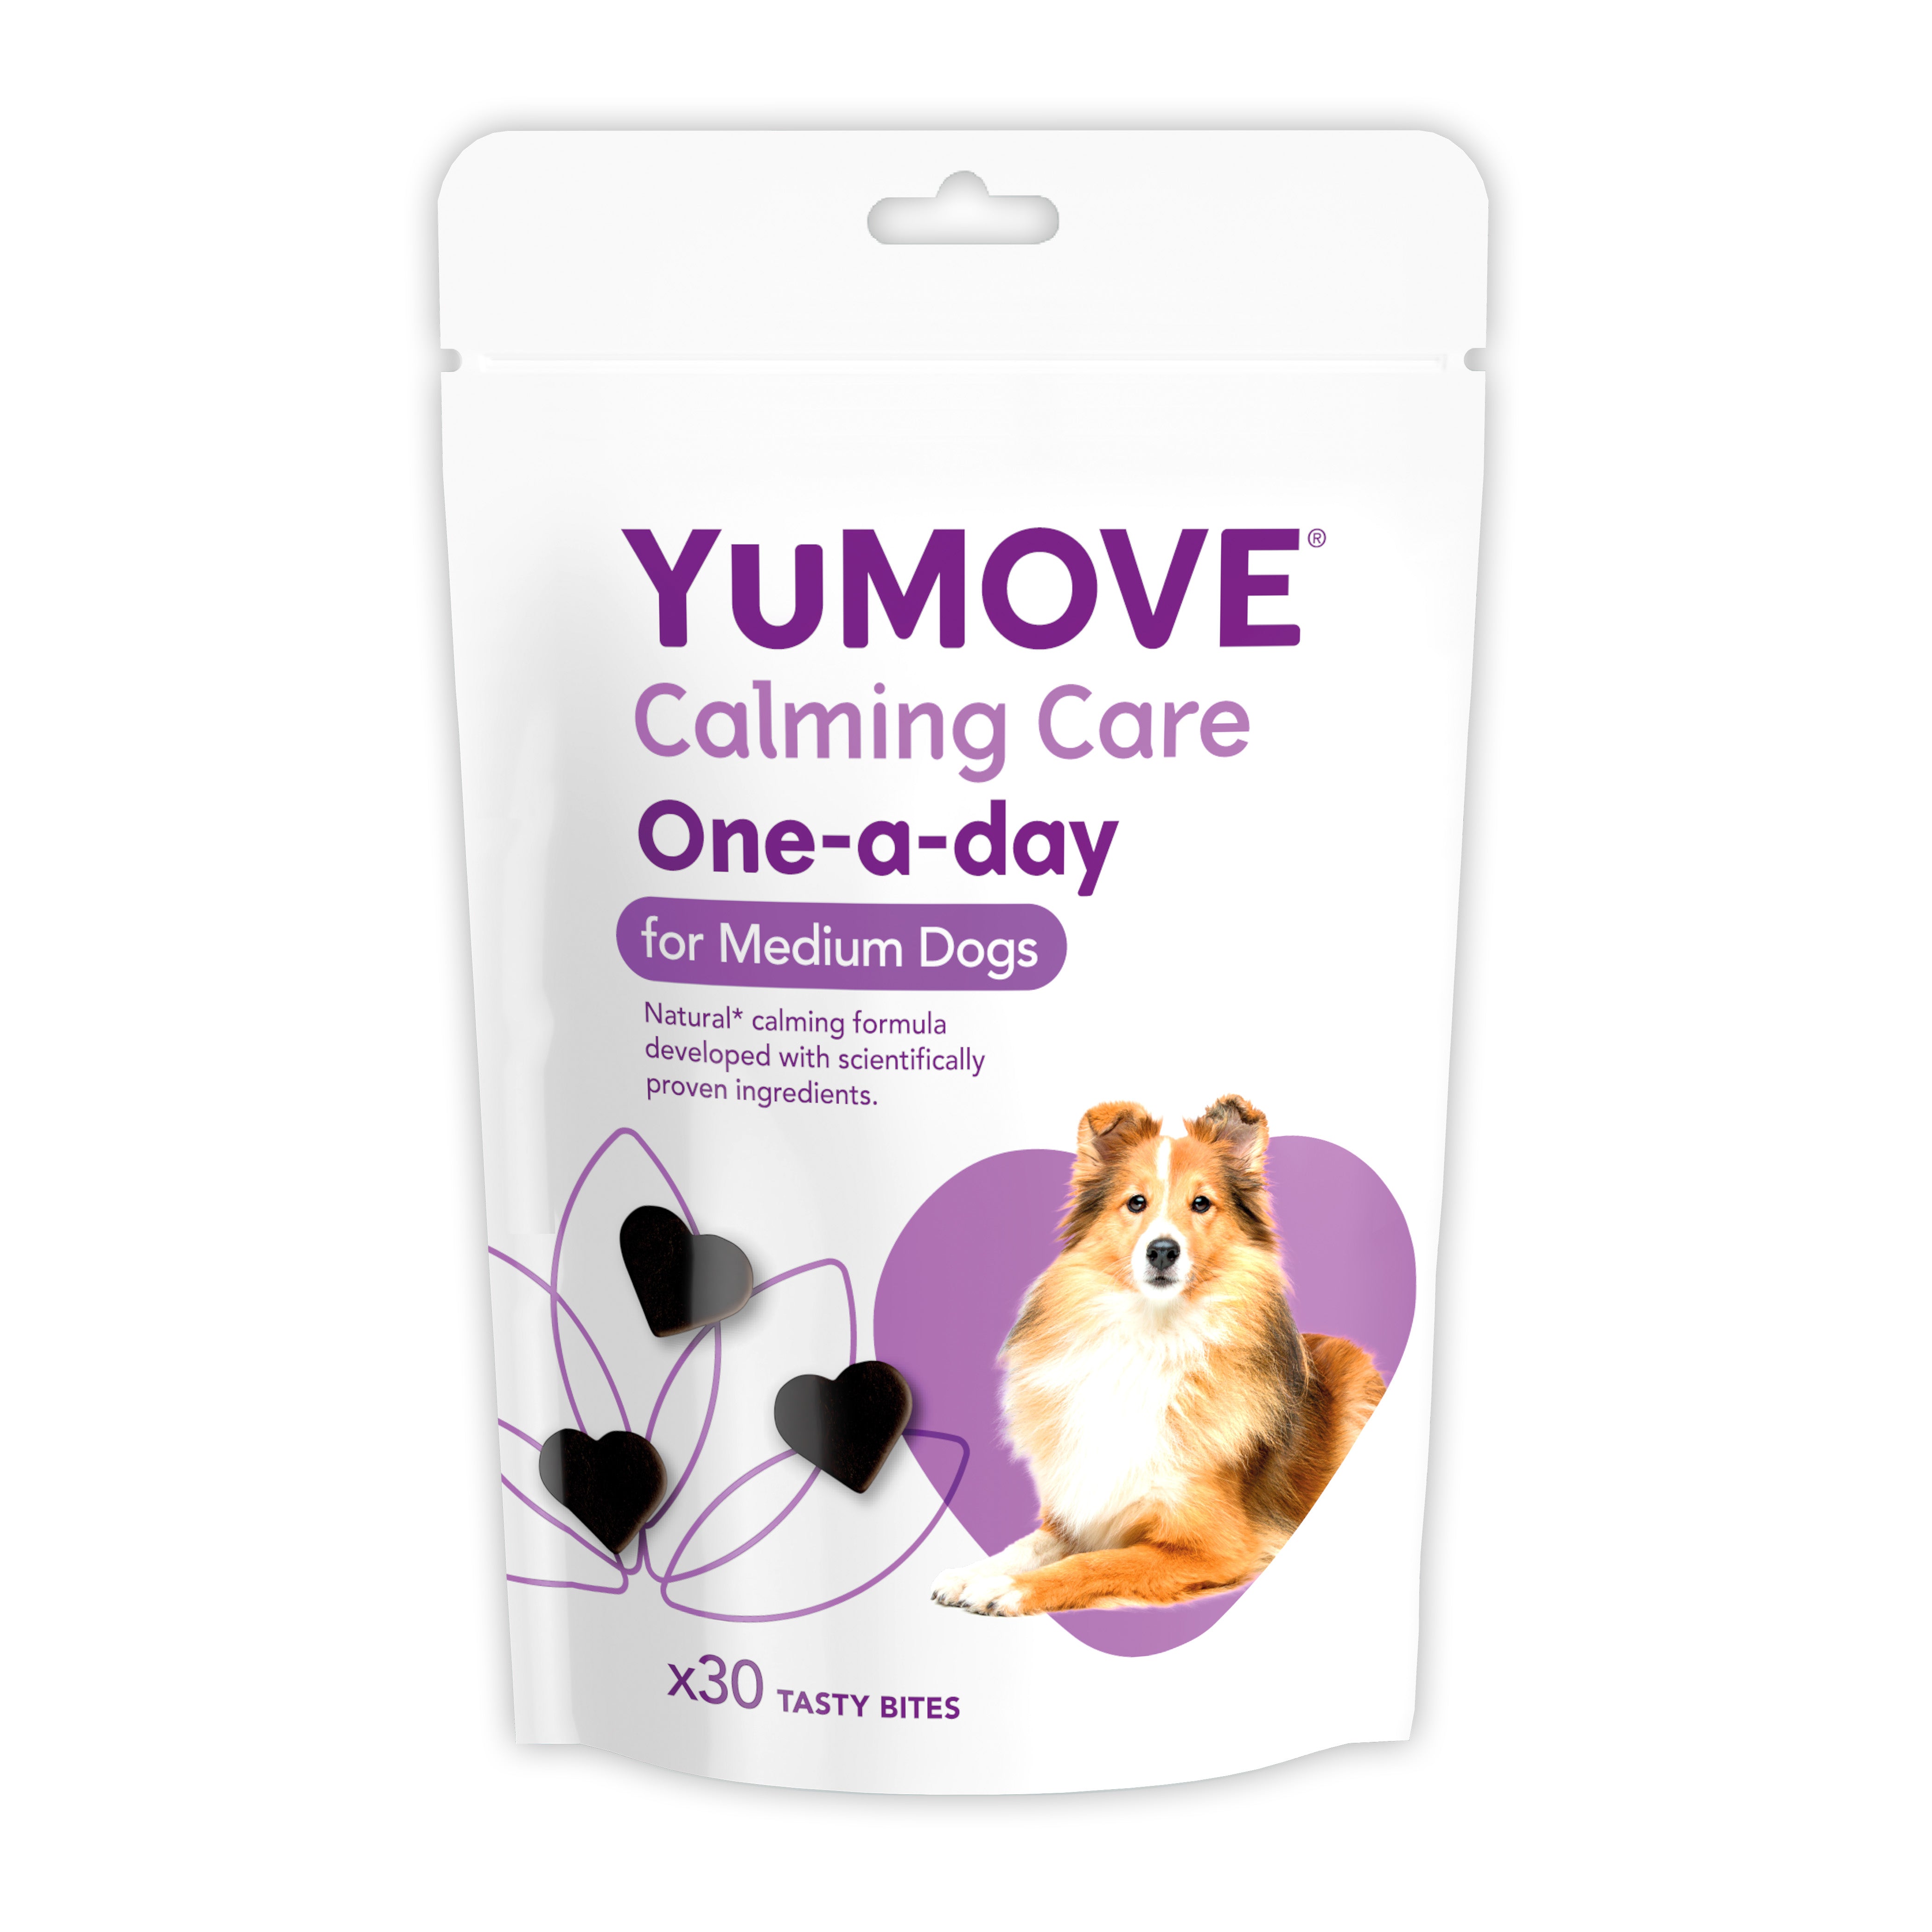 YuMOVE Calming Care One-a-day